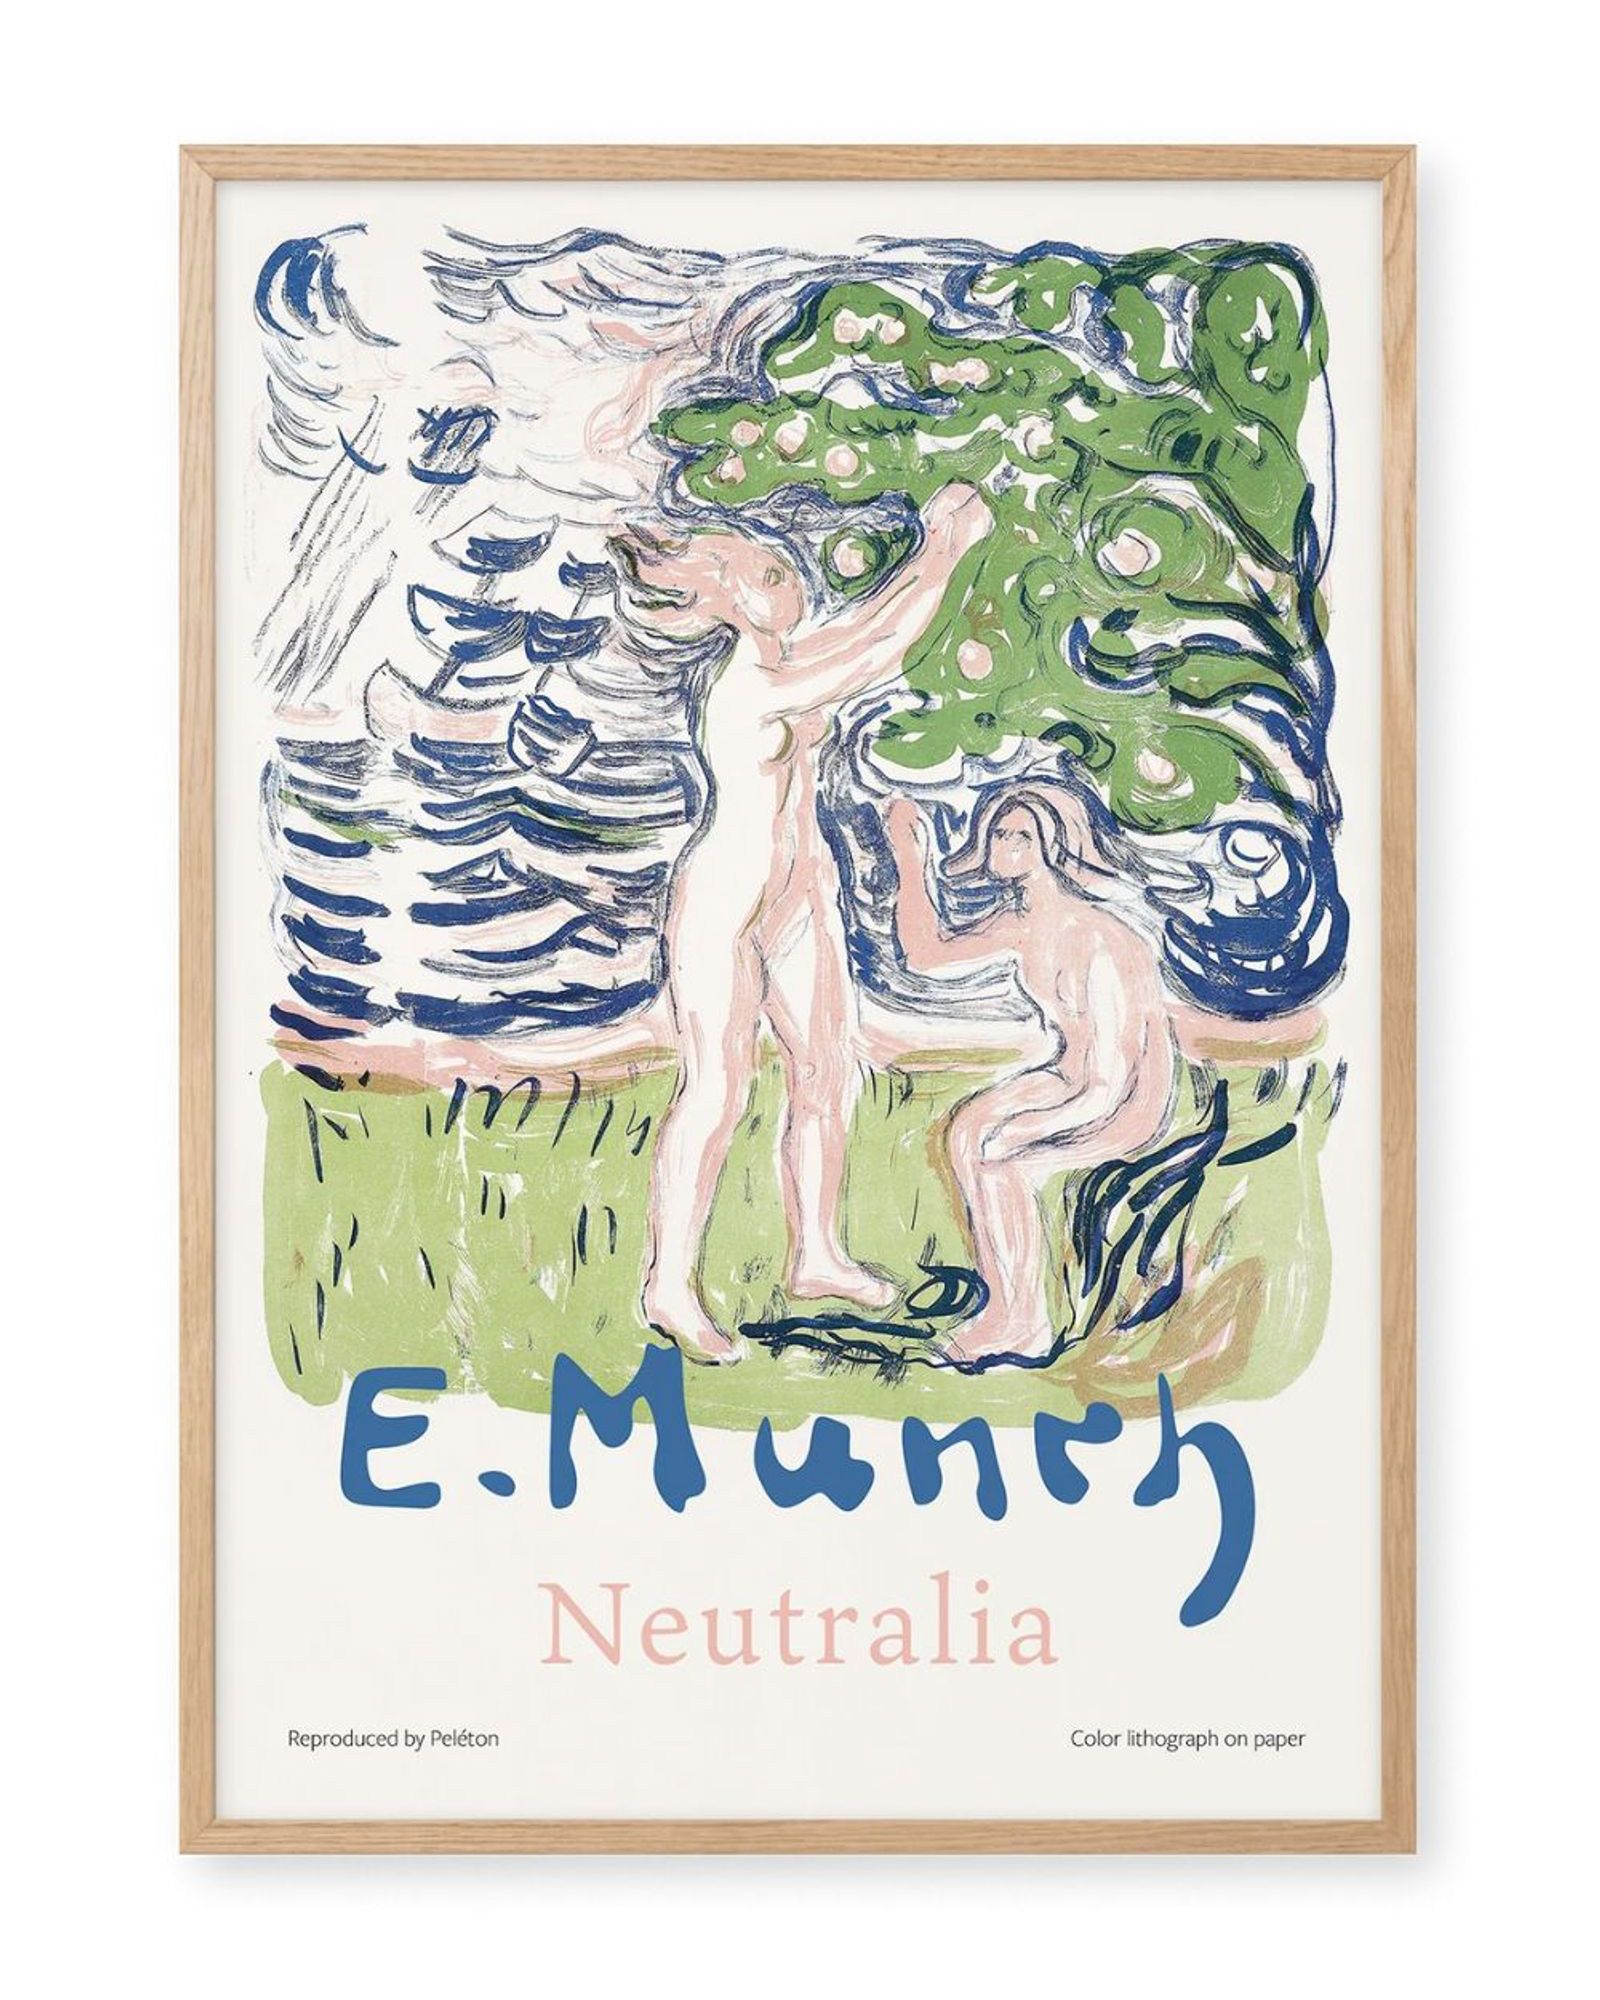 Neutralia by Edward Munch fra Peléton | Julegave idéer til hende